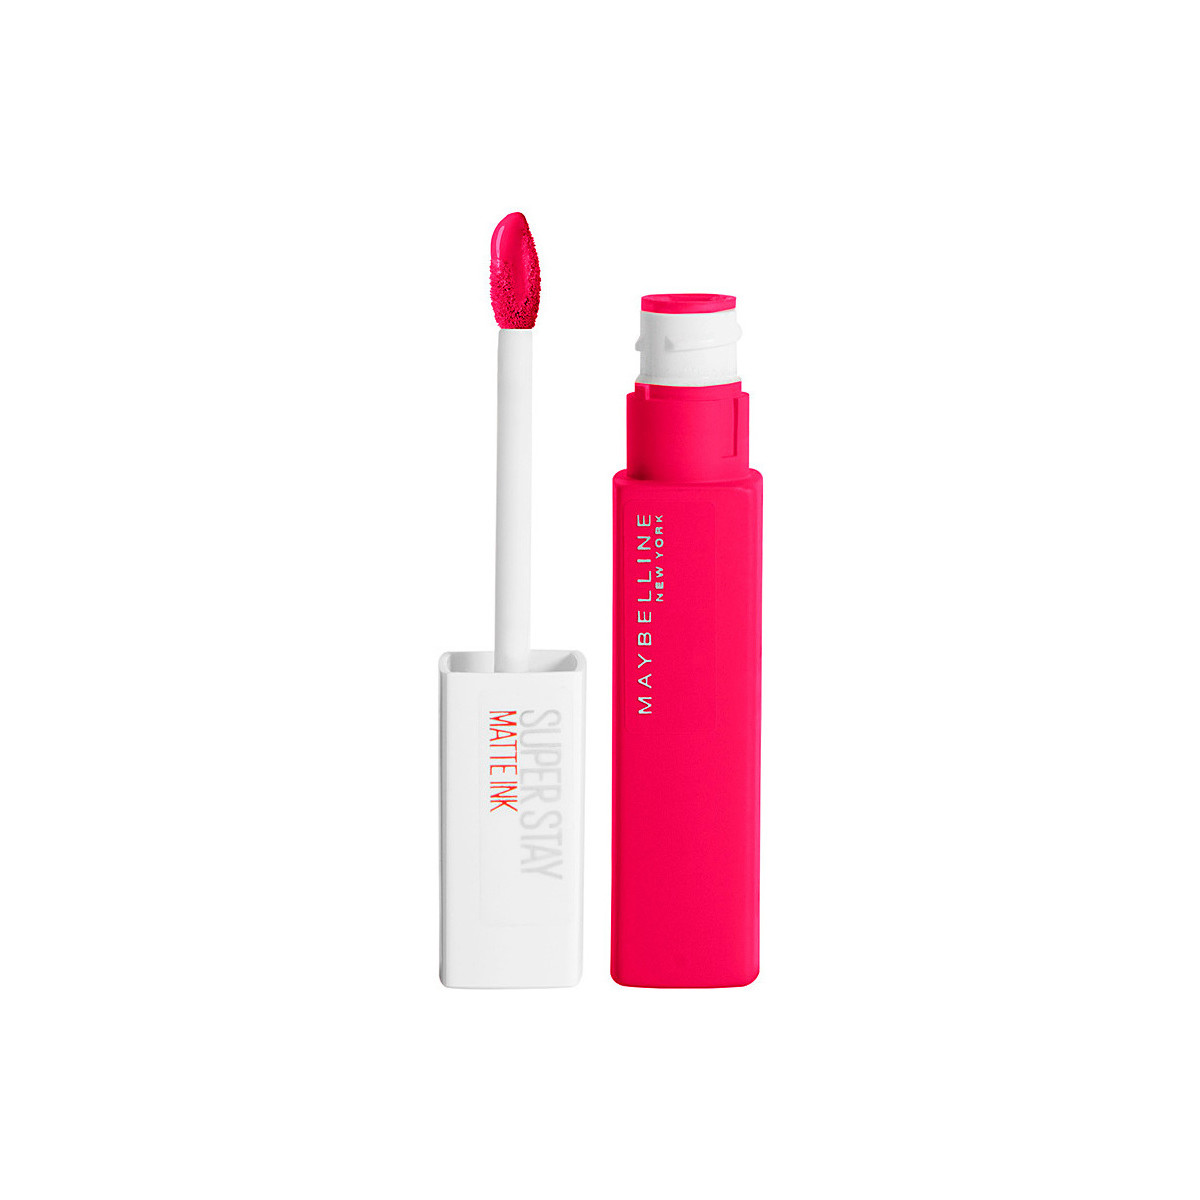 Beauté Femme Rouges à lèvres Maybelline New York Superstay Matte Ink Liquid Lipstick 120-artist 